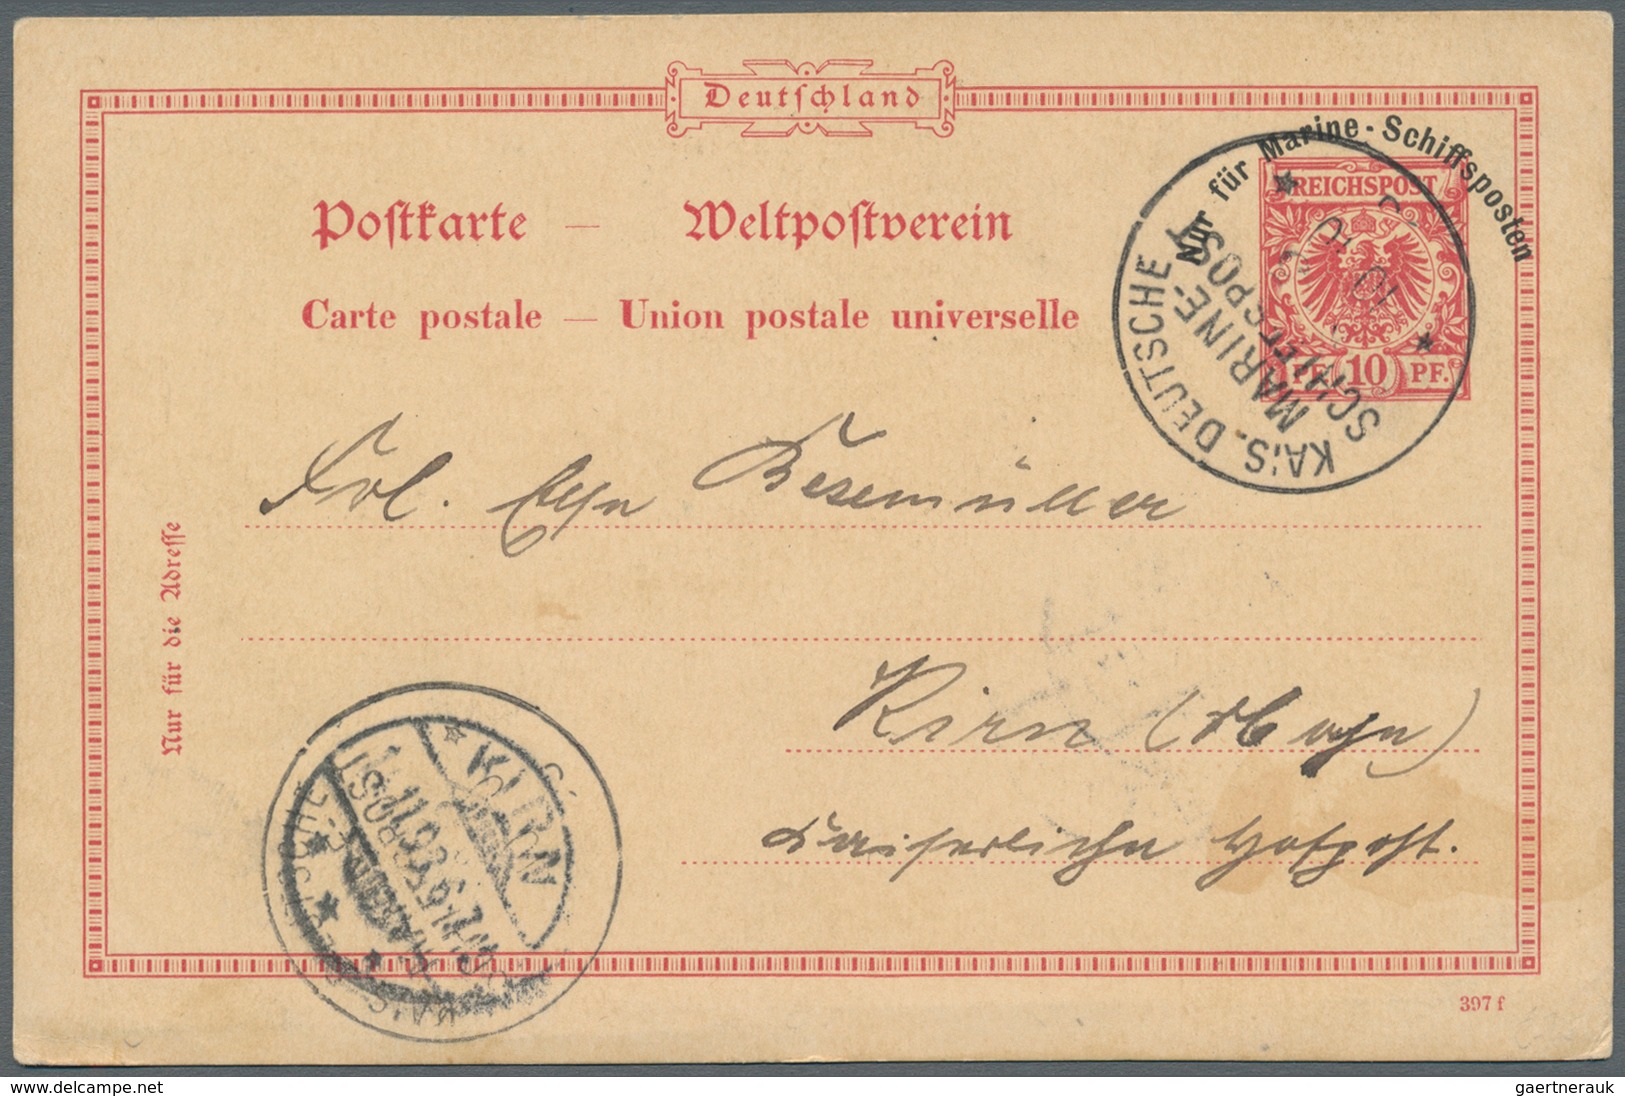 Philippinen: 1898 "SALUD DE MANILA" Illustration On Back Of German Navy Ship Mail Postal Stationery - Philippines